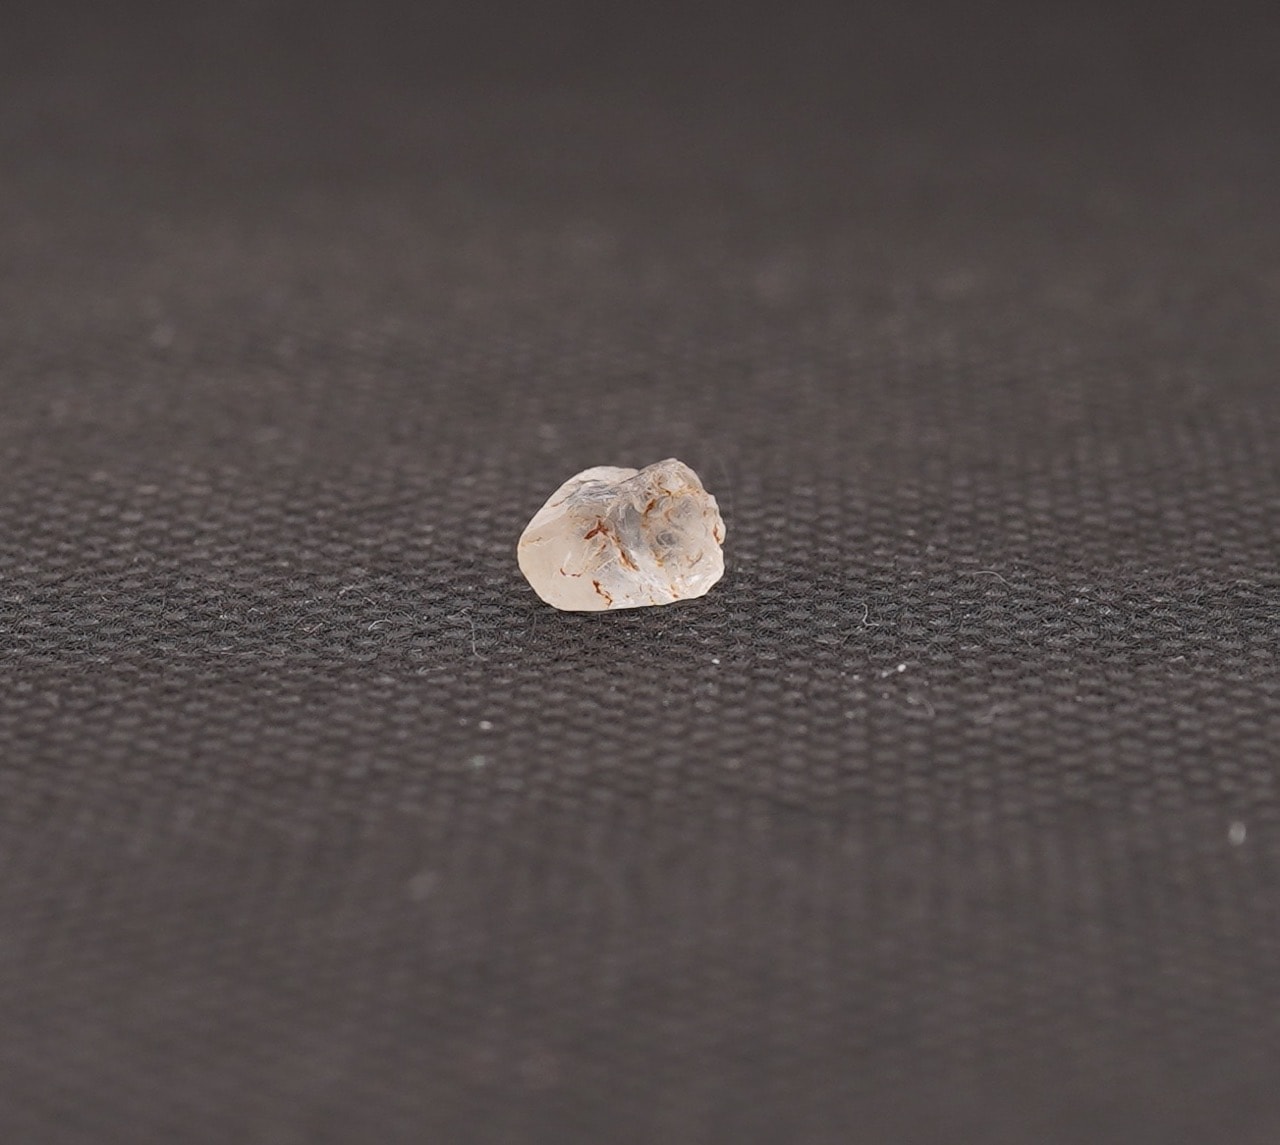 Fenacit nigerian cristal natural unicat f319